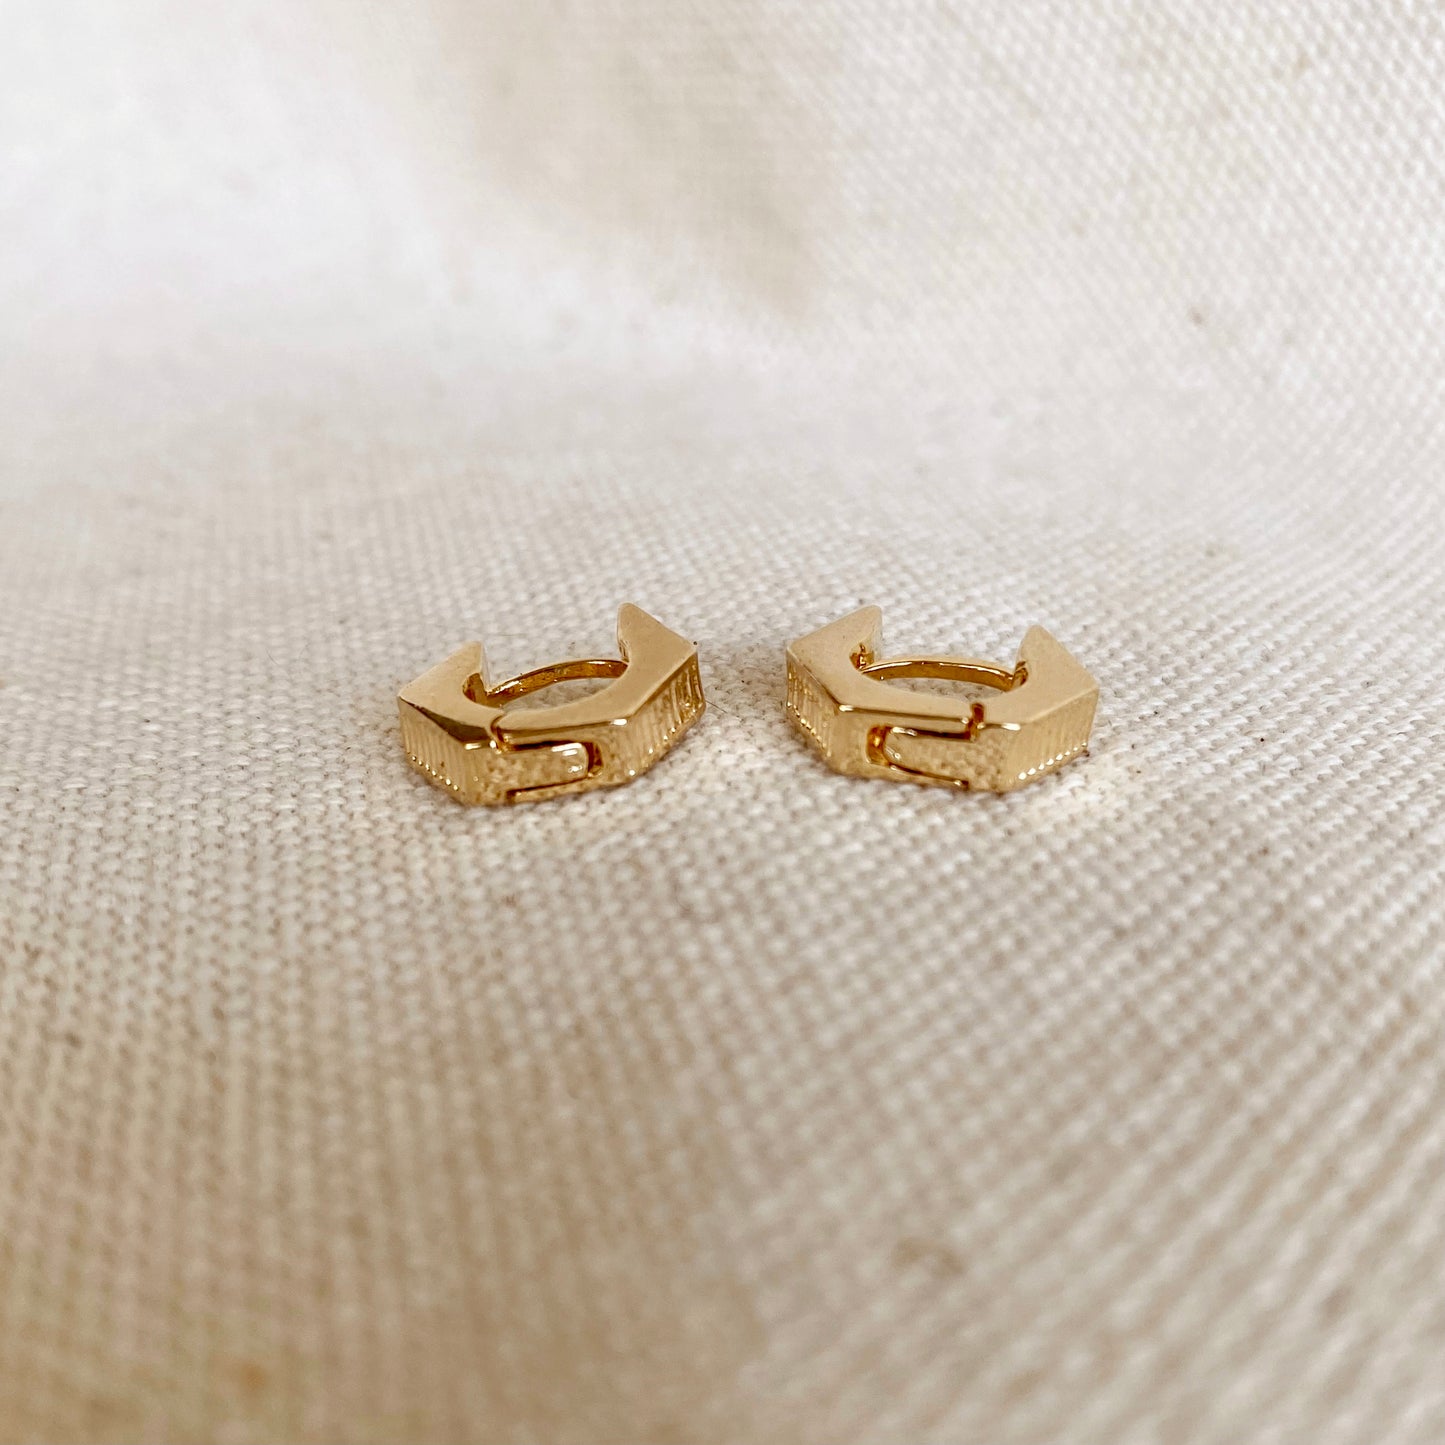 GoldFi 18k Gold Filled Textured Shaped Clicker Hoop Earrings